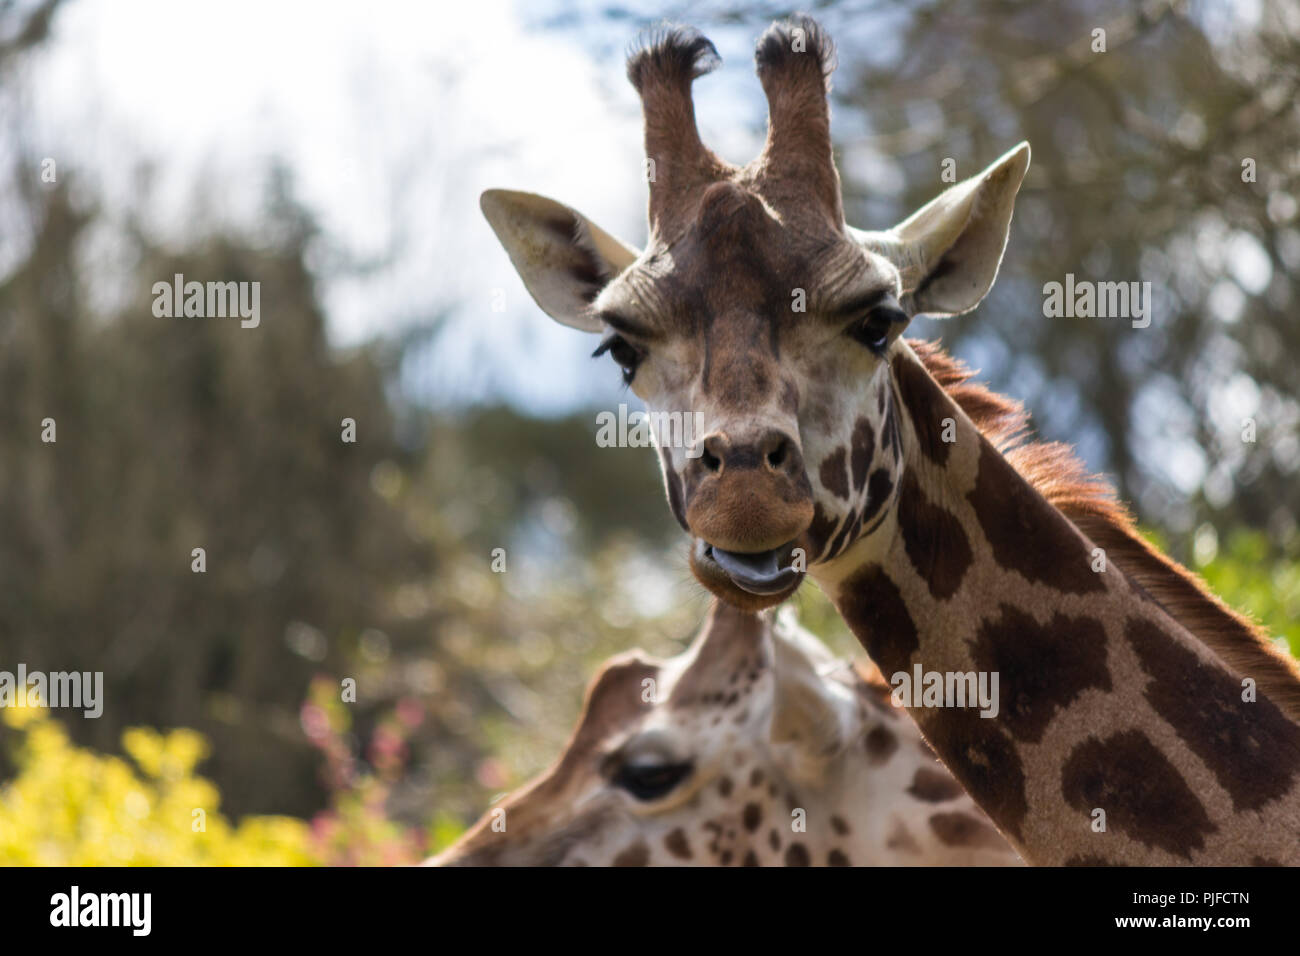 Giraffe sticking its tongue out Stock Photo